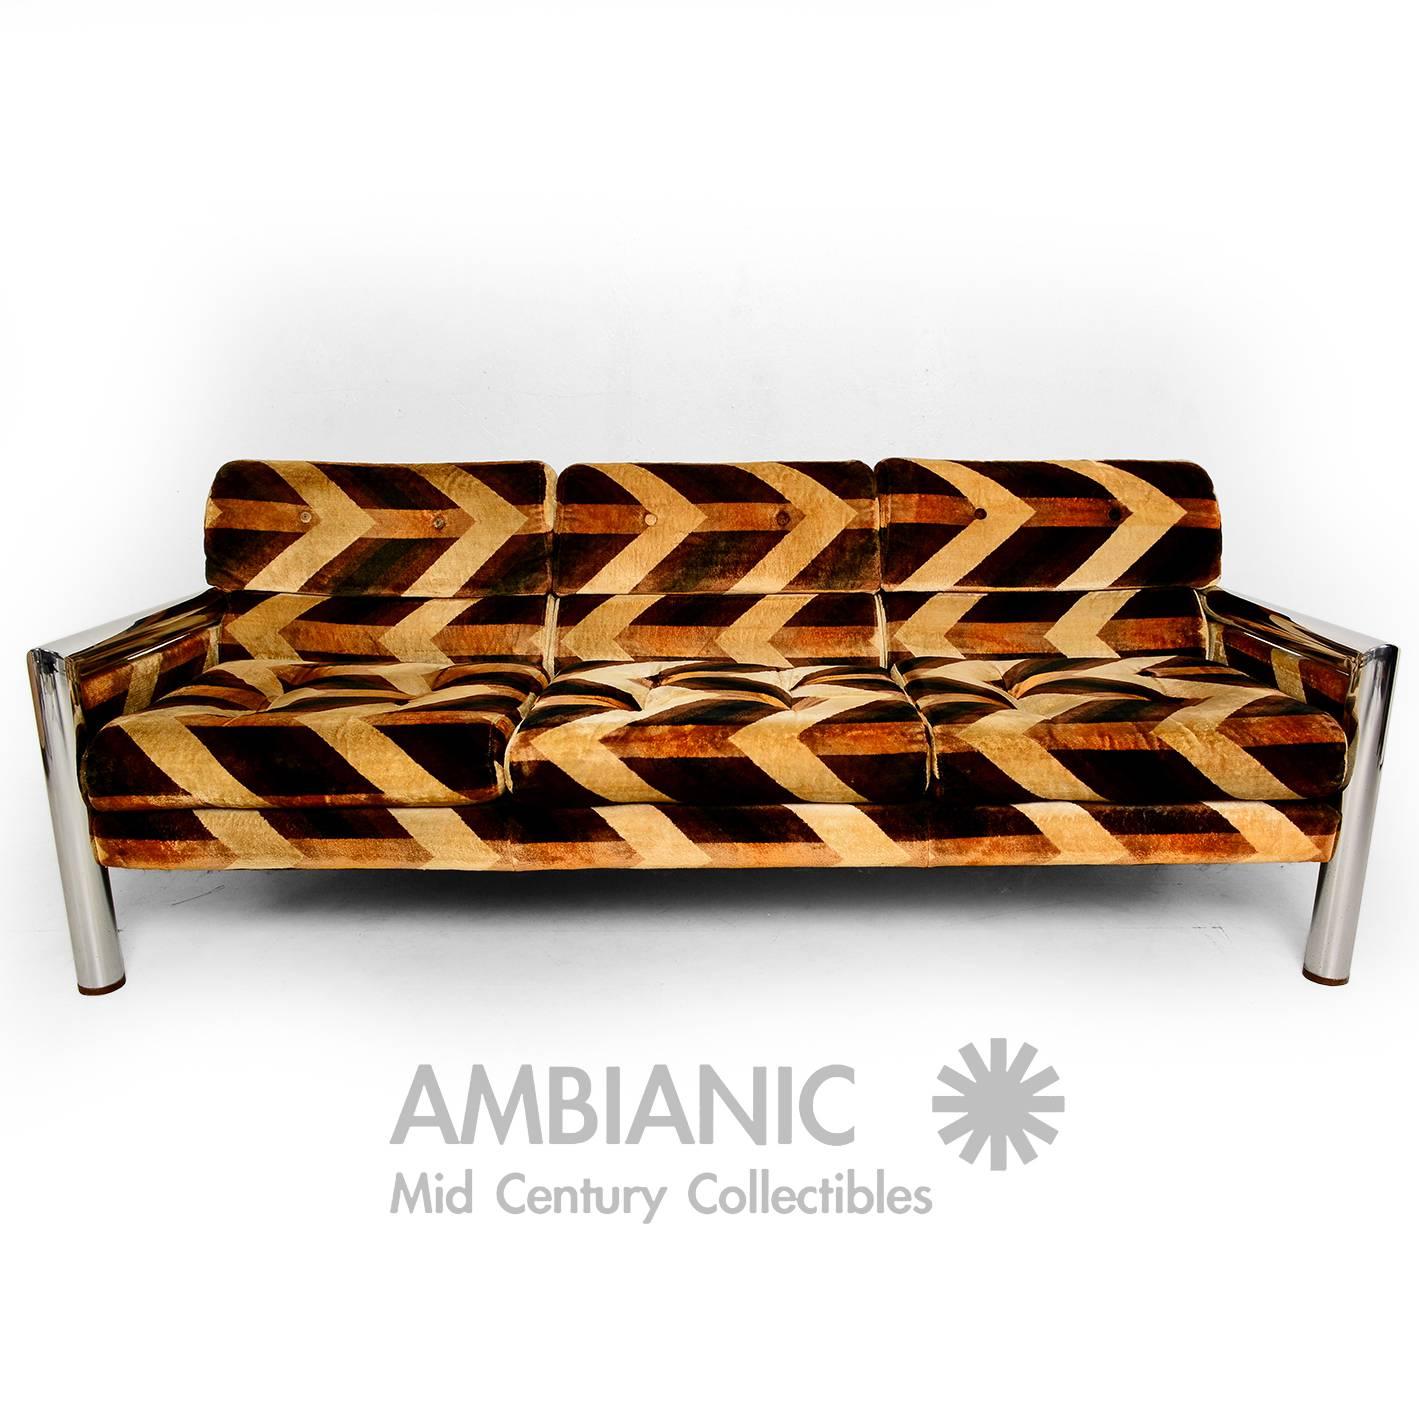 Mid-Century Modern Mid-Century Sofa with Chrome Frame after Milo Baughman